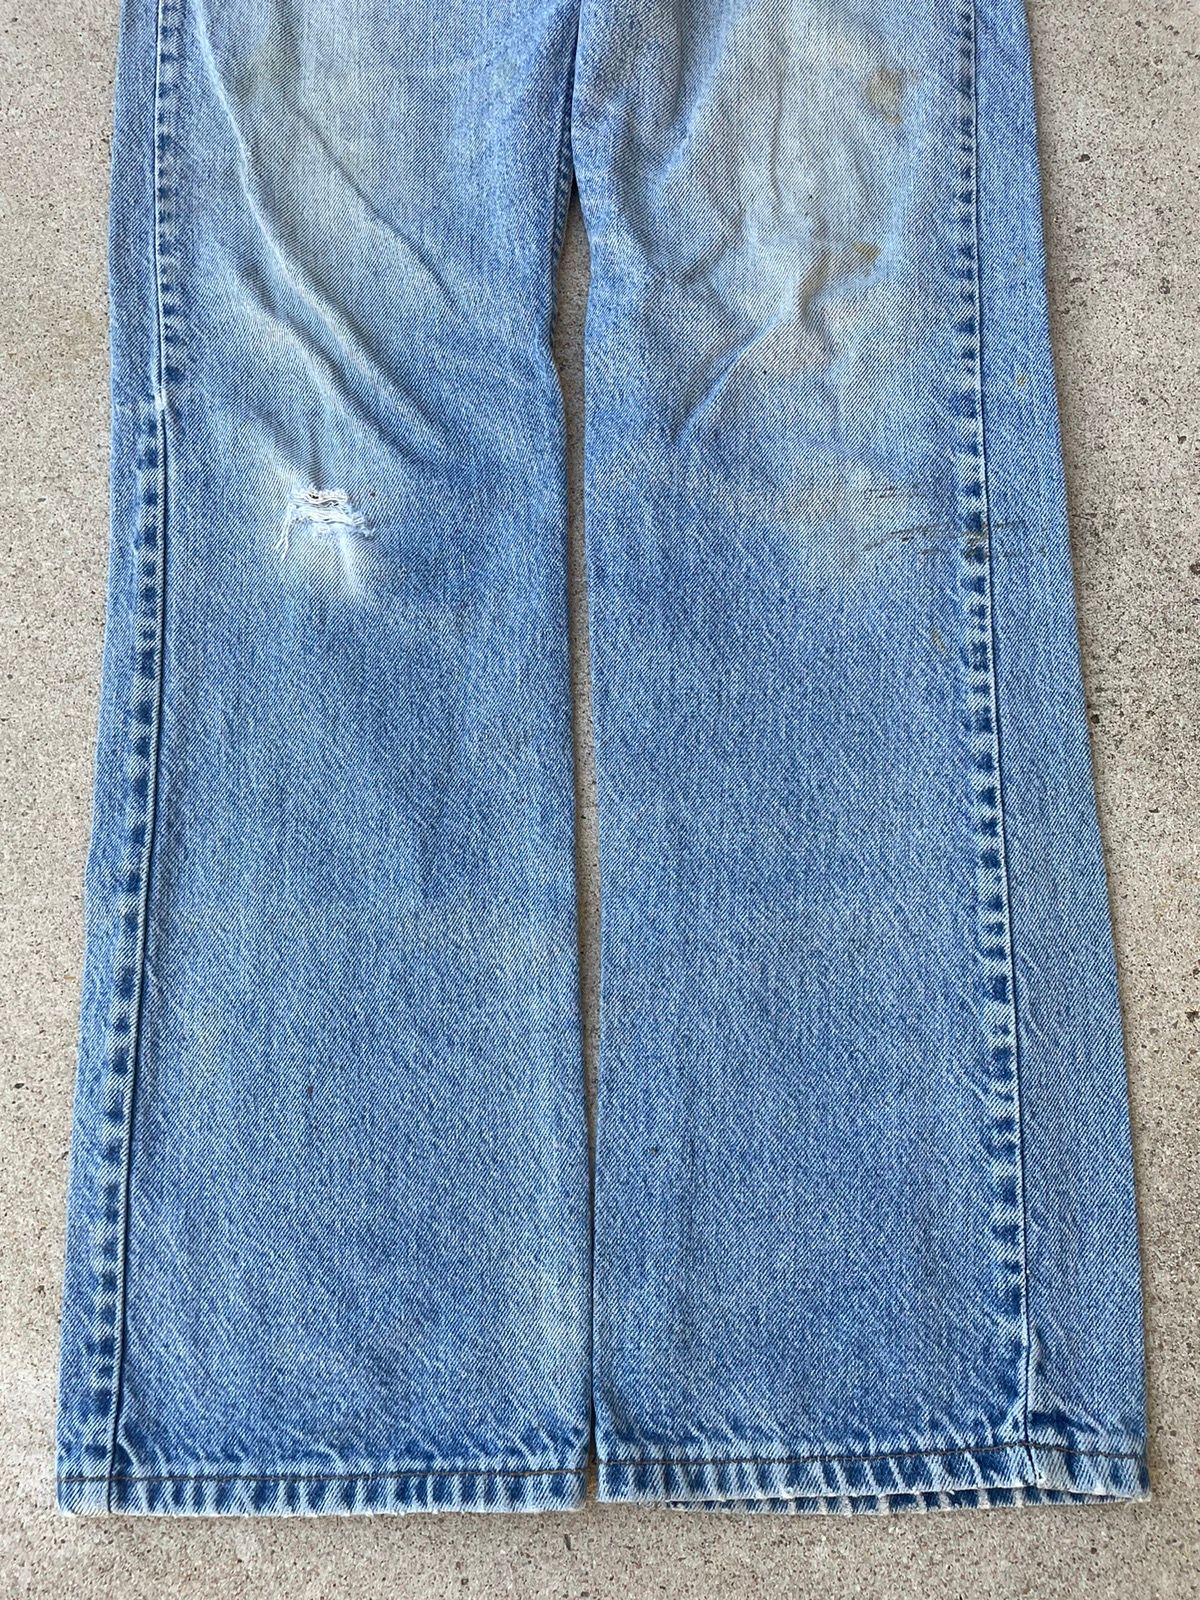 Vintage Vtg 80s Levis 517 Orange Tab Bootcut Distressed Jeans 34x31 Size US 32 / EU 48 - 3 Thumbnail